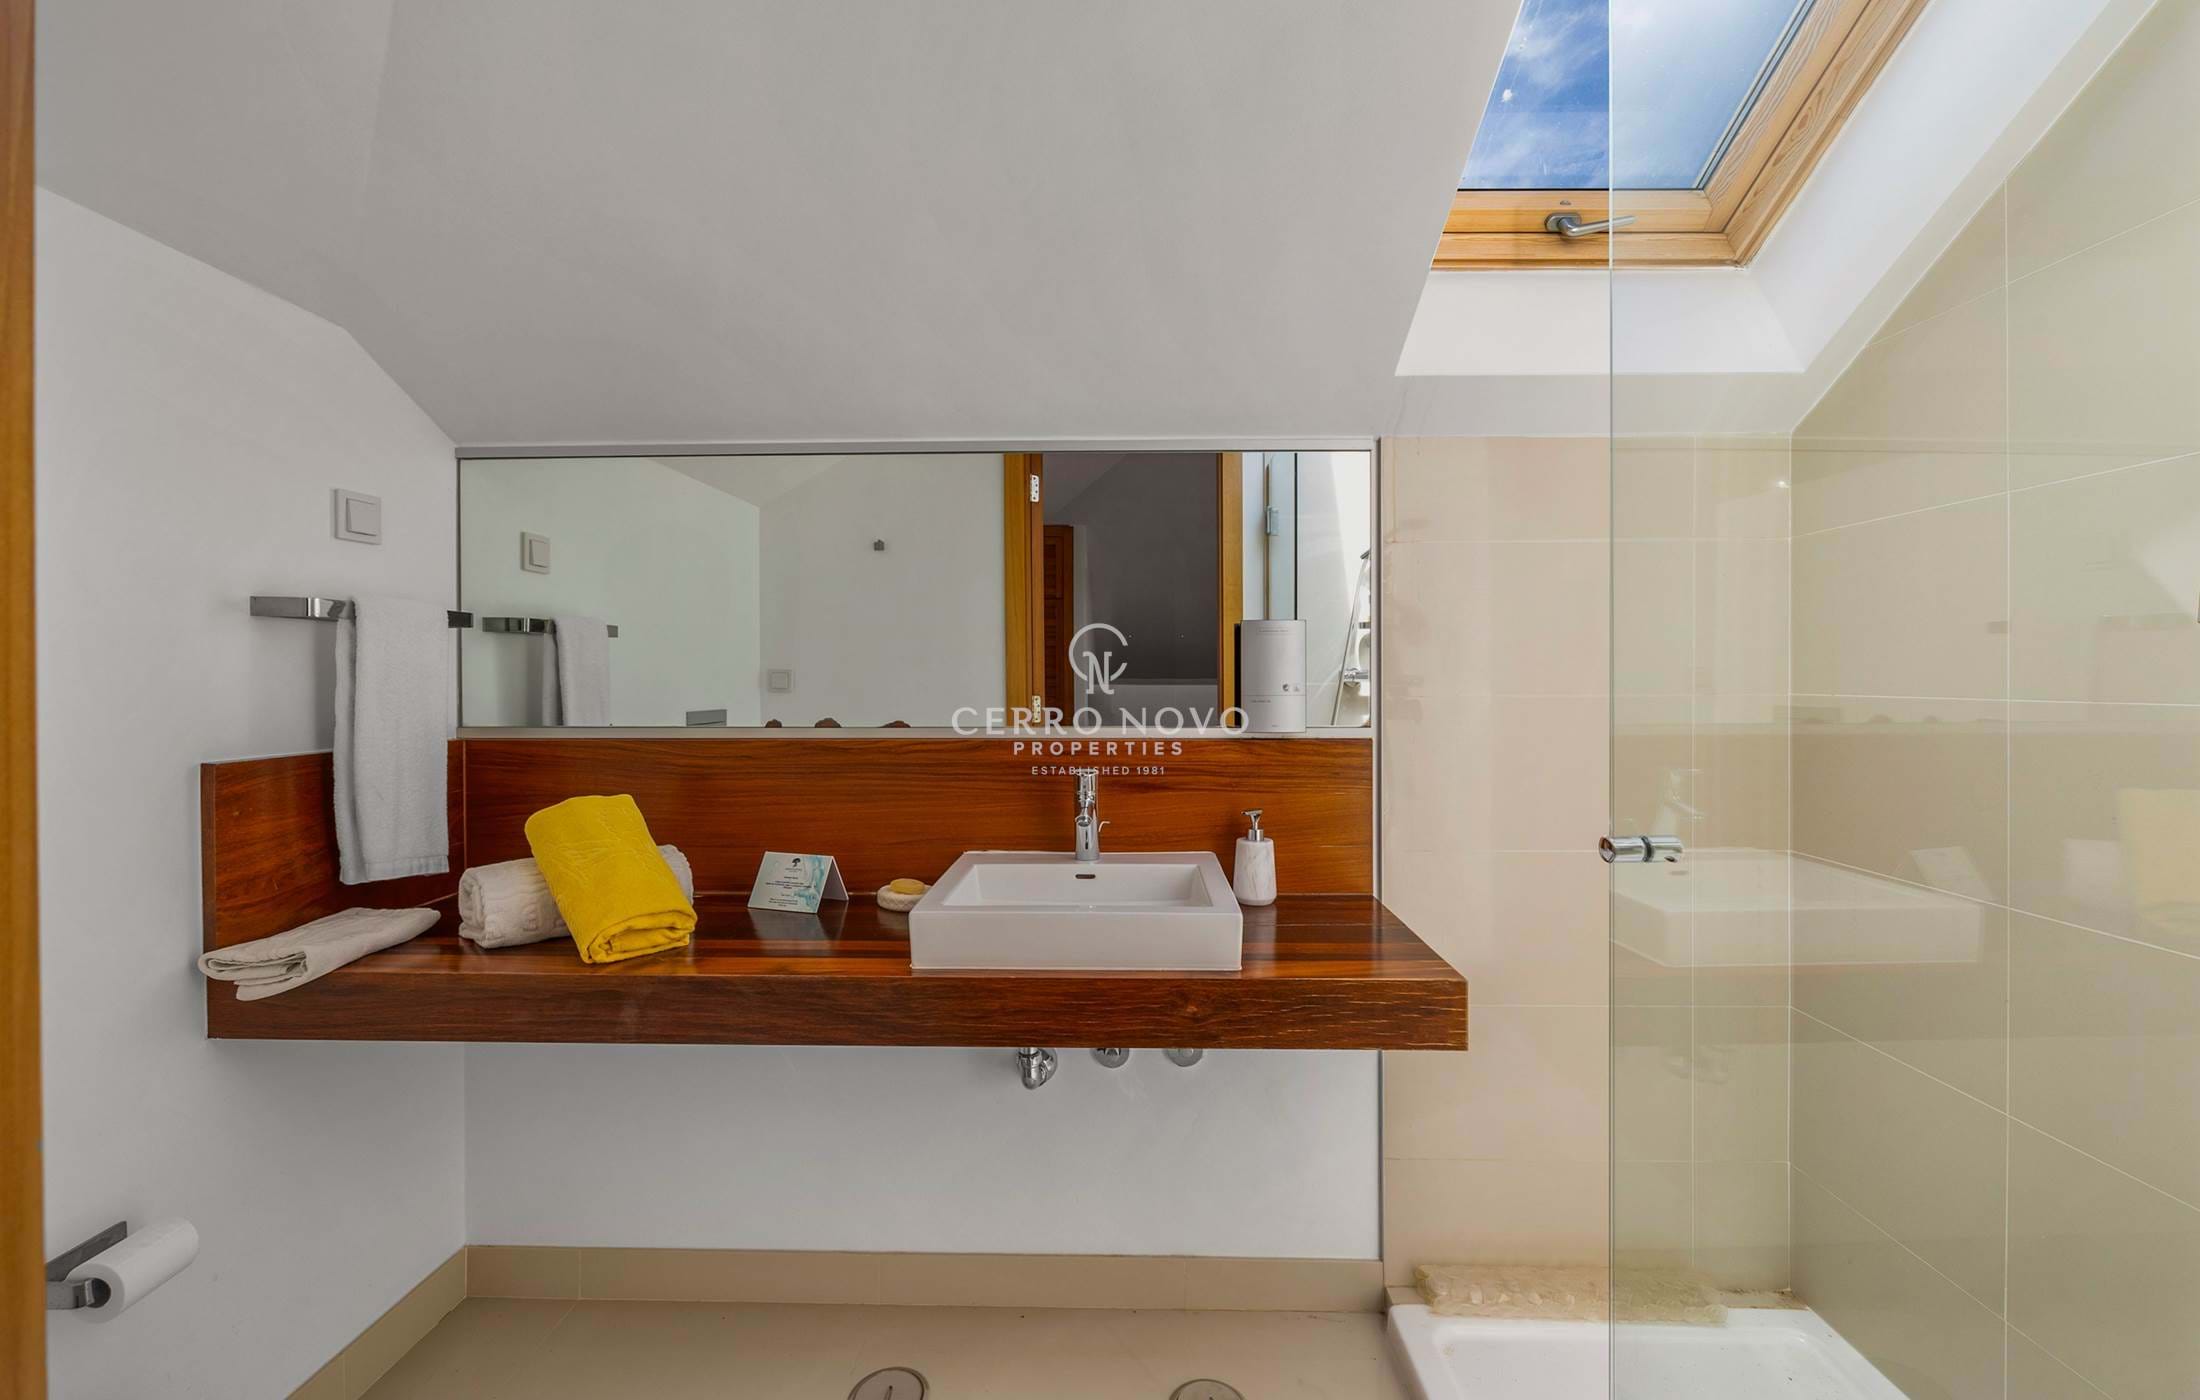  Luxury Duplex apartment (2+1)  in Amendoeira Golf Resort